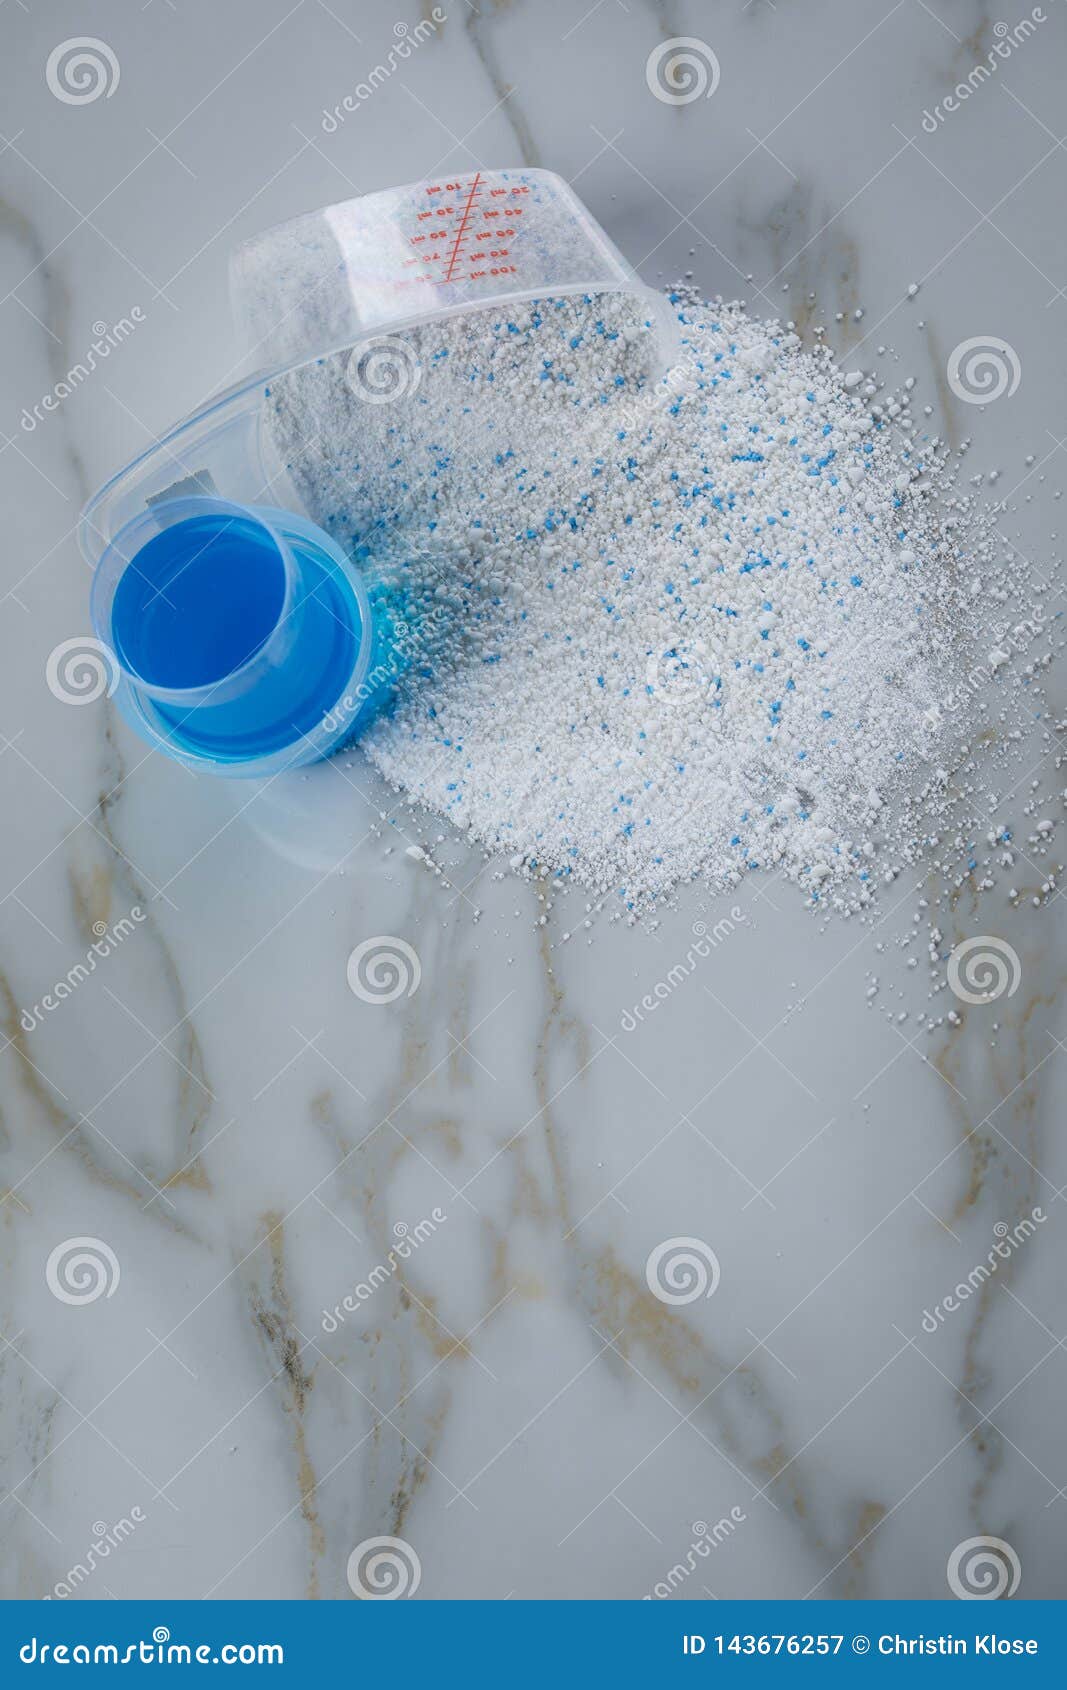 https://thumbs.dreamstime.com/z/laundry-detergent-powder-blue-liquid-gel-measuring-cup-laundry-detergent-powder-blue-liquid-gel-measuring-cup-143676257.jpg